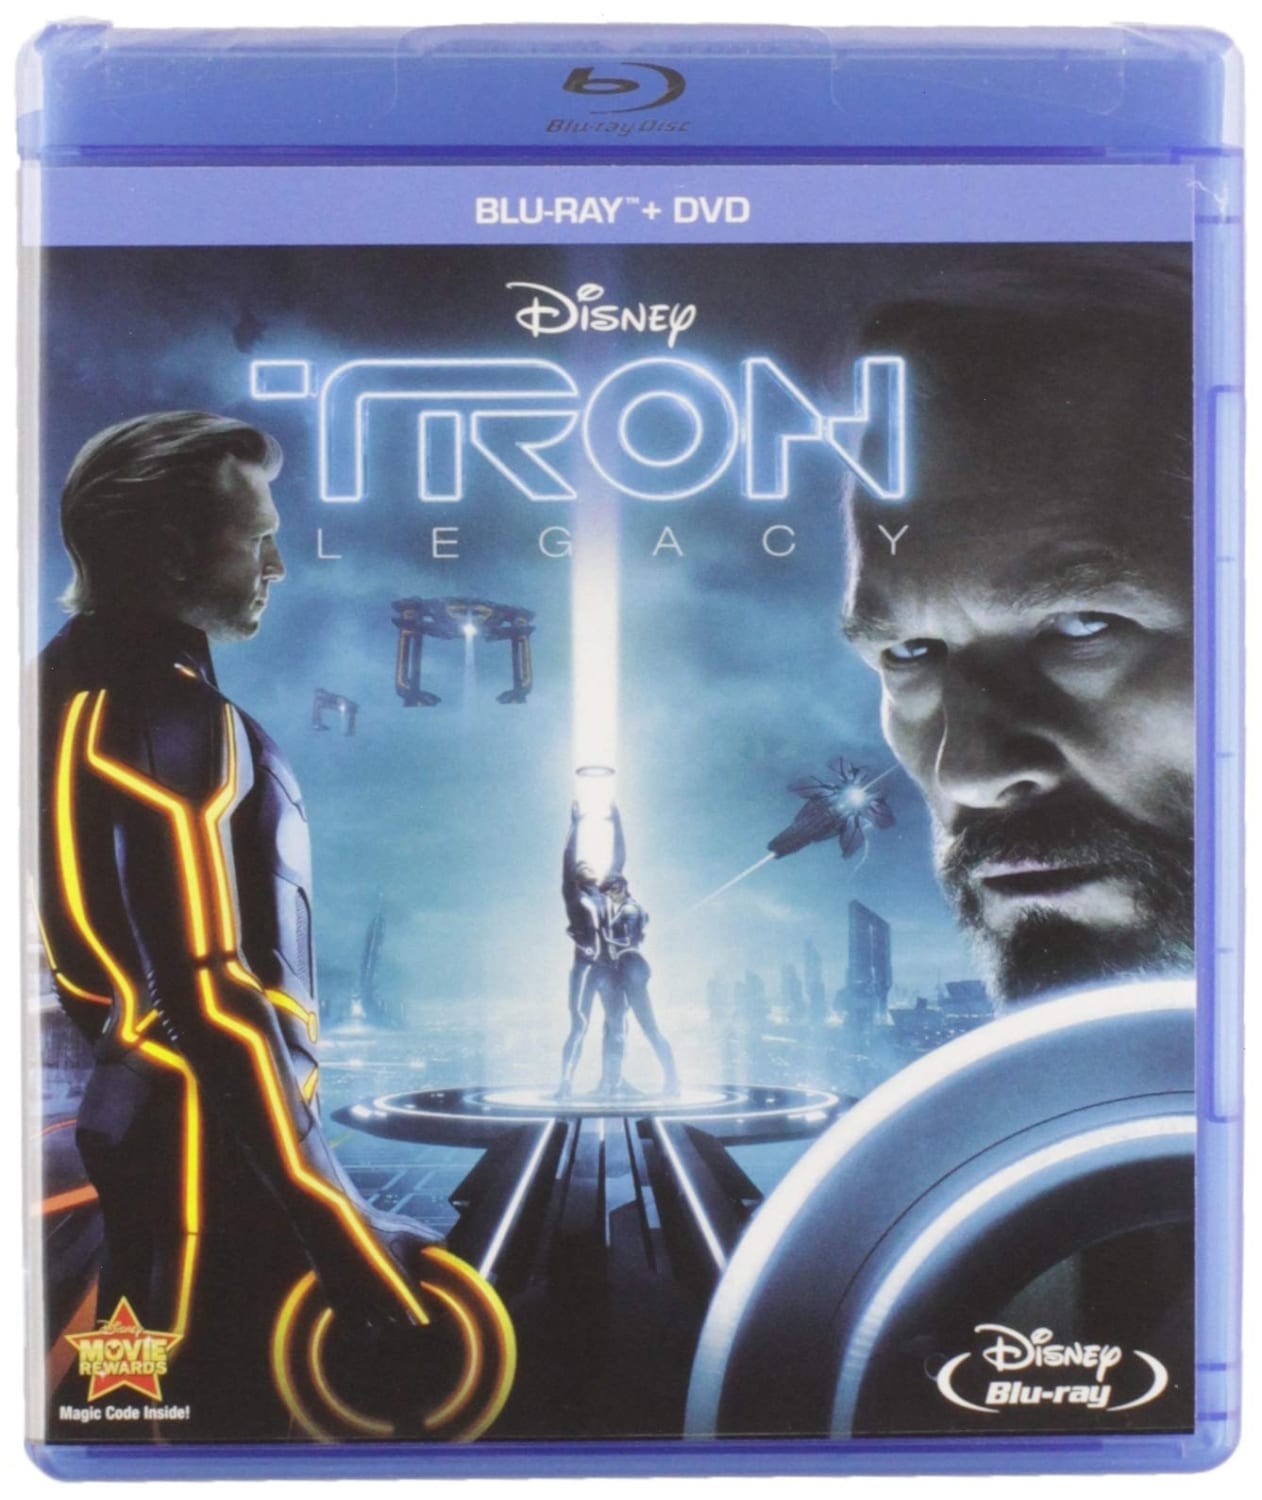 Tron: Legacy (Blu-ray / DVD) on MovieShack